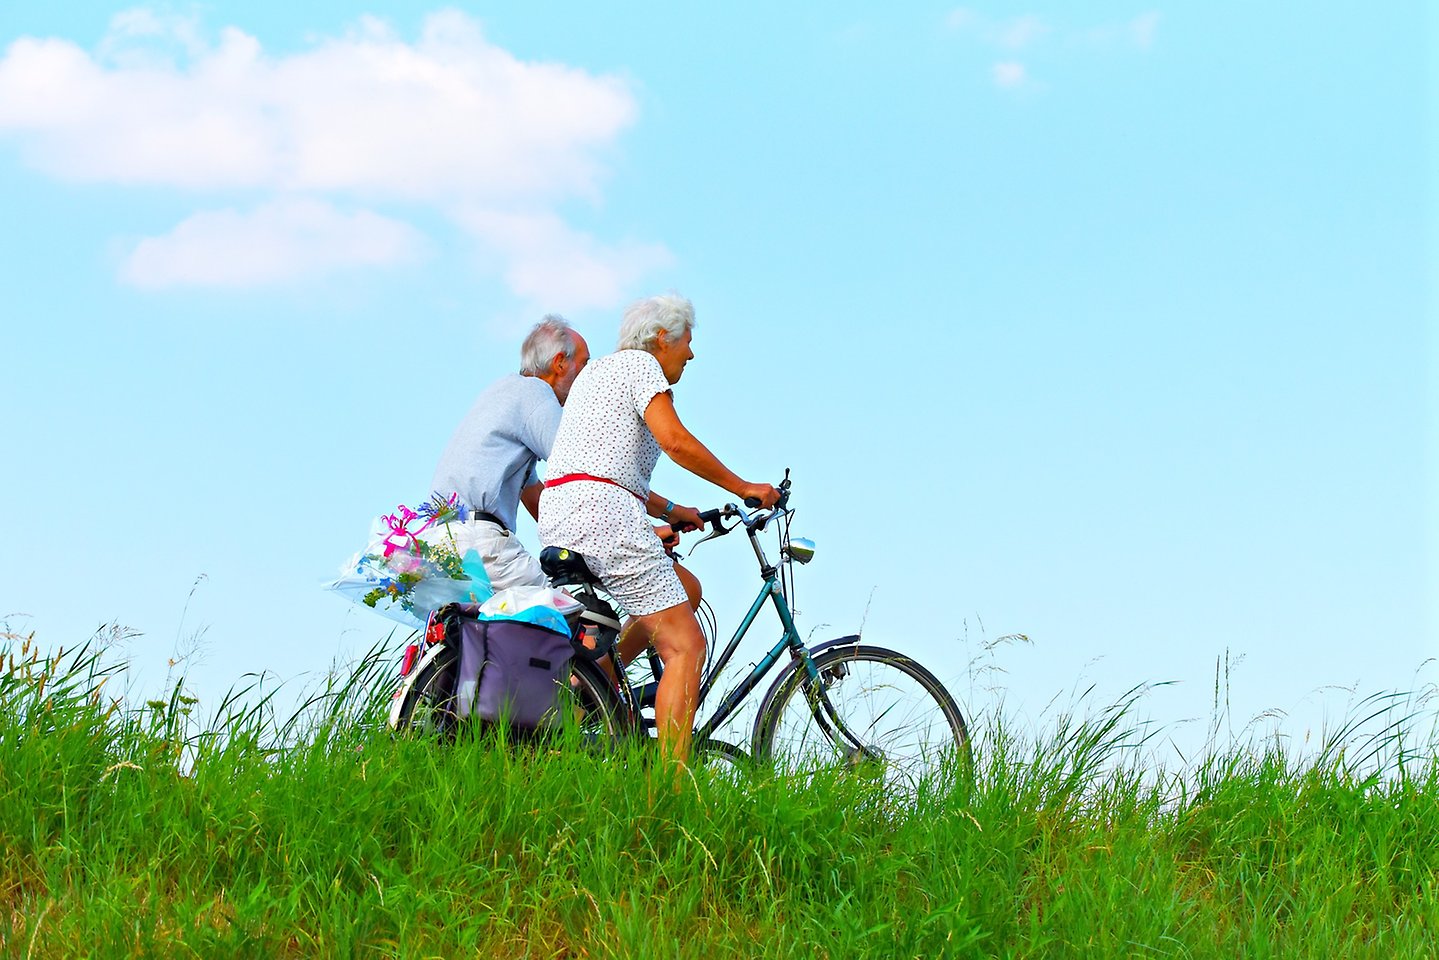 Par på cykeltur i sommargrönska.  Copyright Pixabay